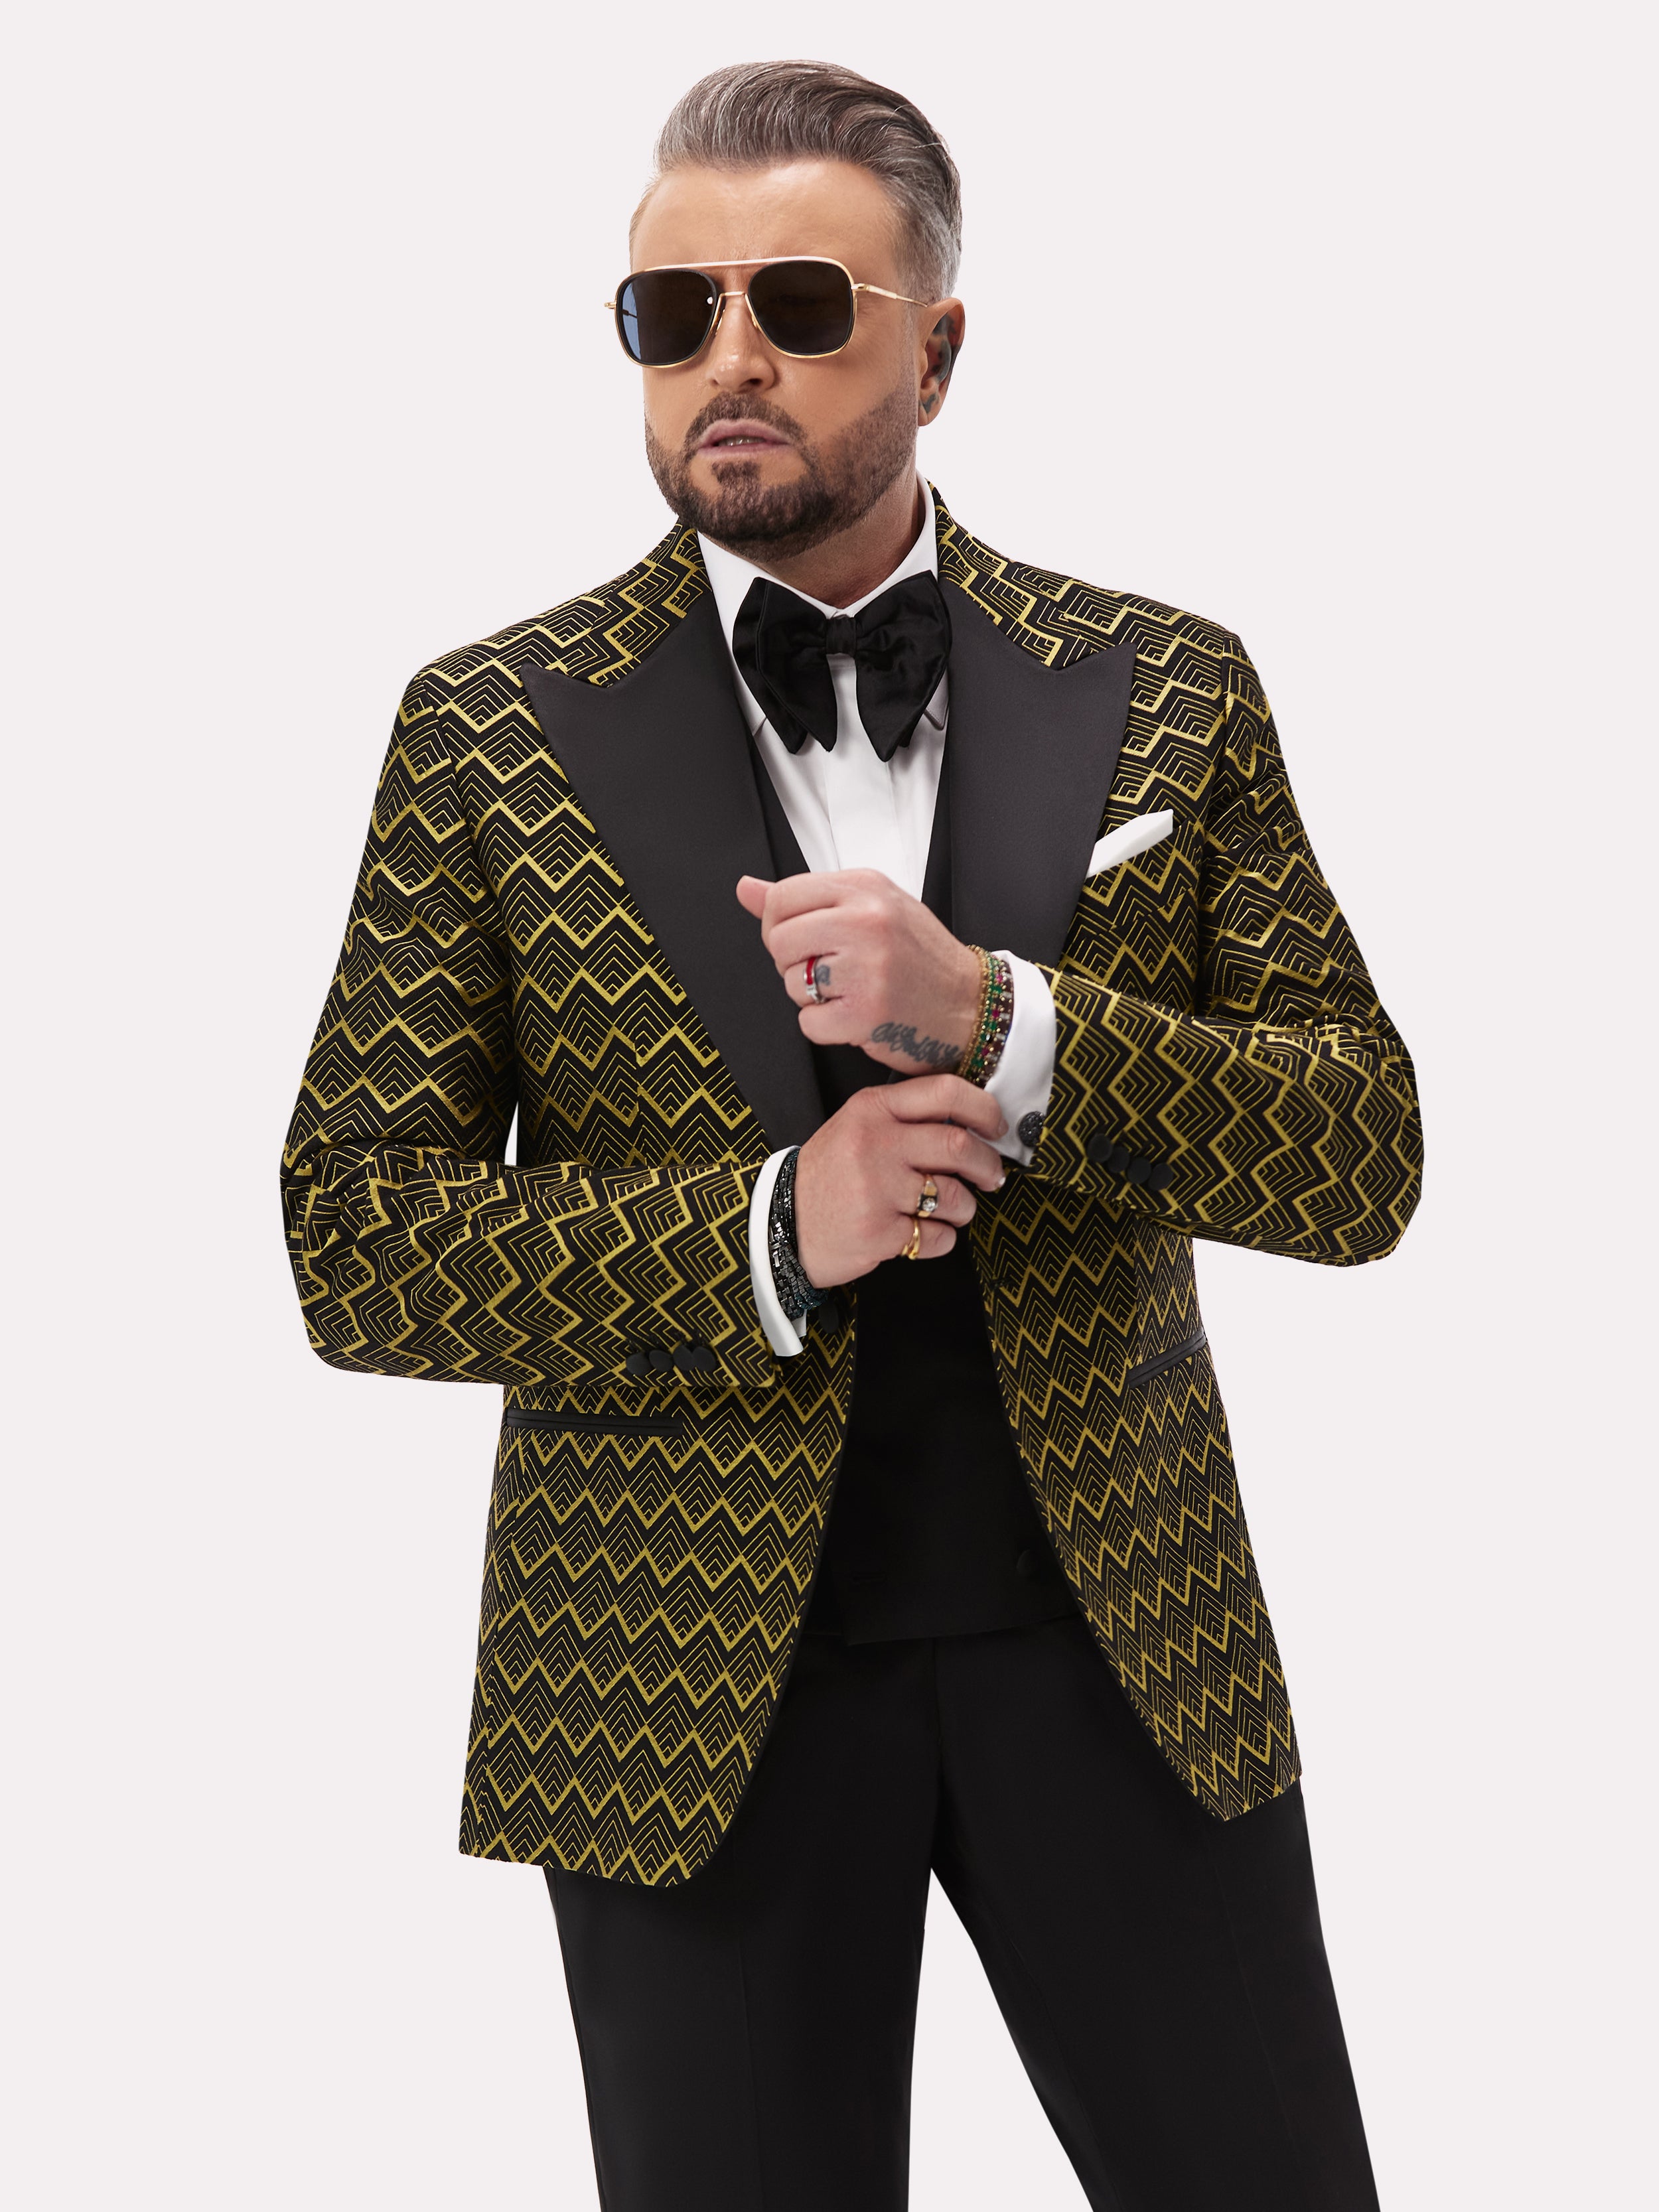 Black tuxedo jacket with golden geometric pattern